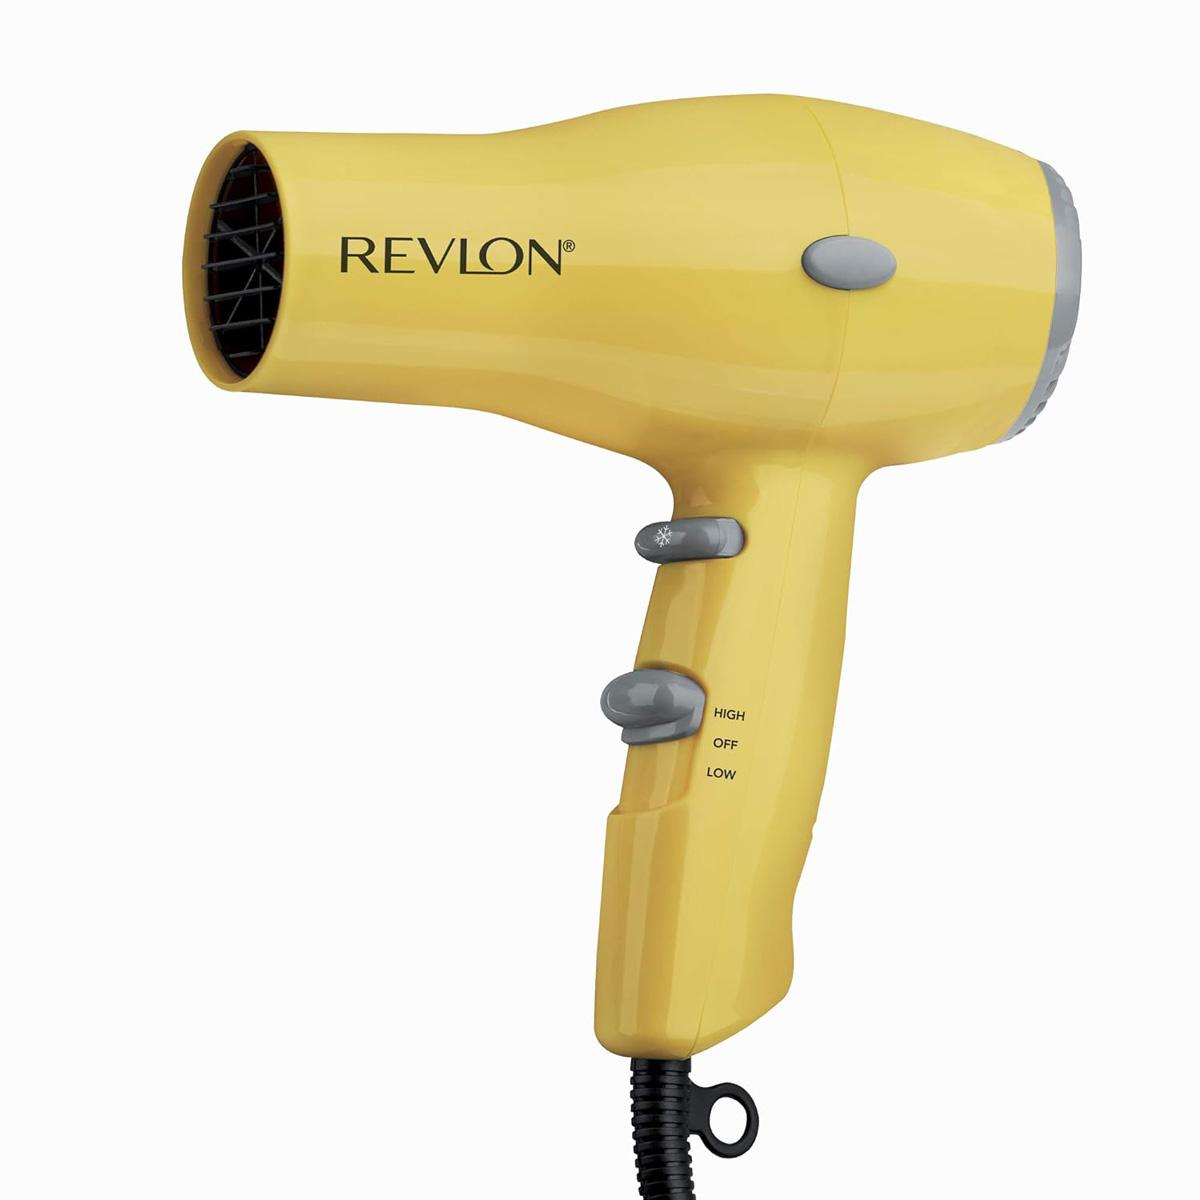 Revlon 1875W Lightweight Compact Travel Hair Dryer for $7.99